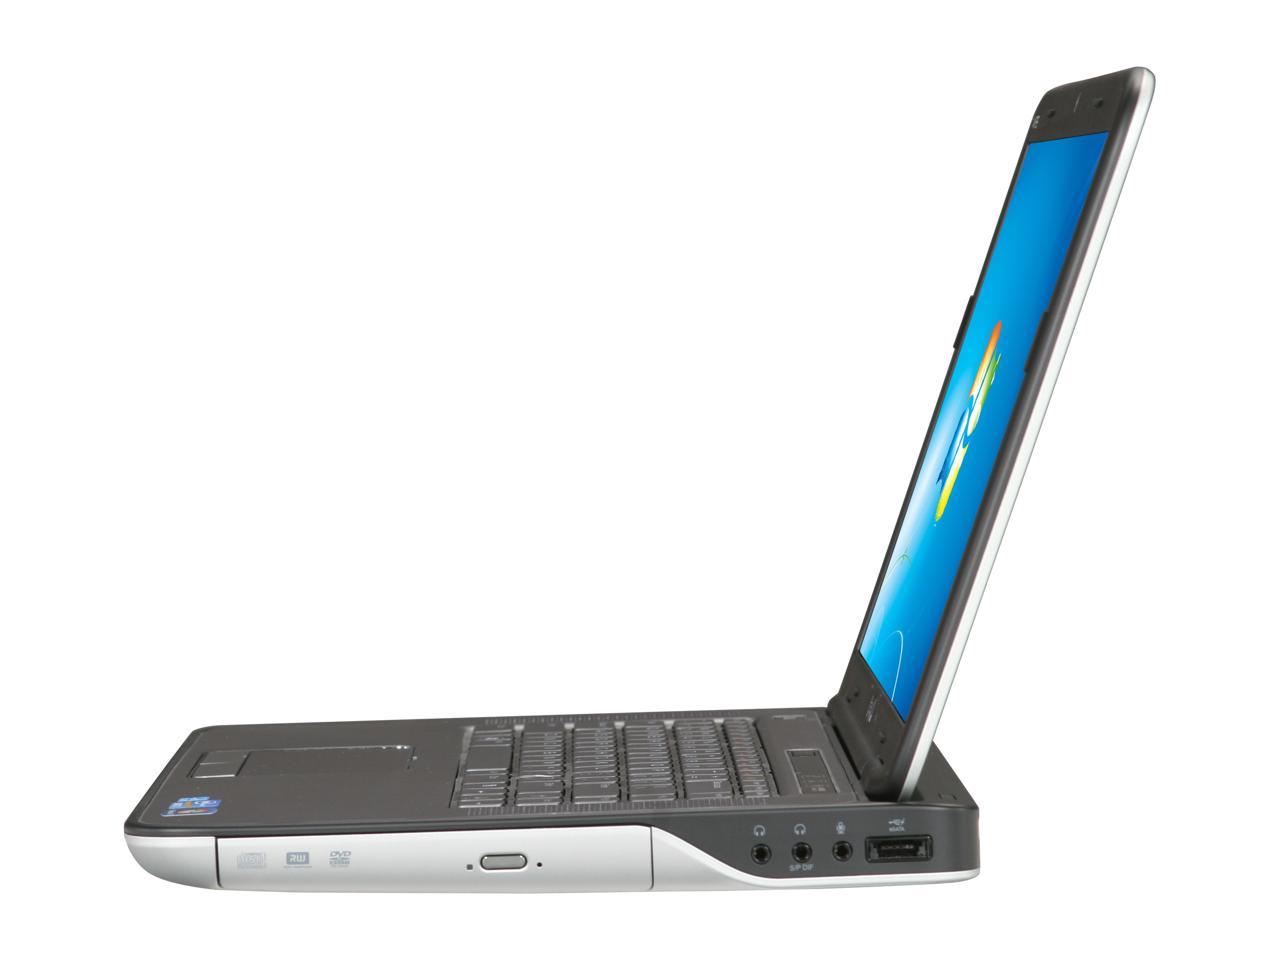 DELL Laptop XPS 15 (L502x) Intel Core i7 2nd Gen 2630QM (2.00 GHz) 6 GB